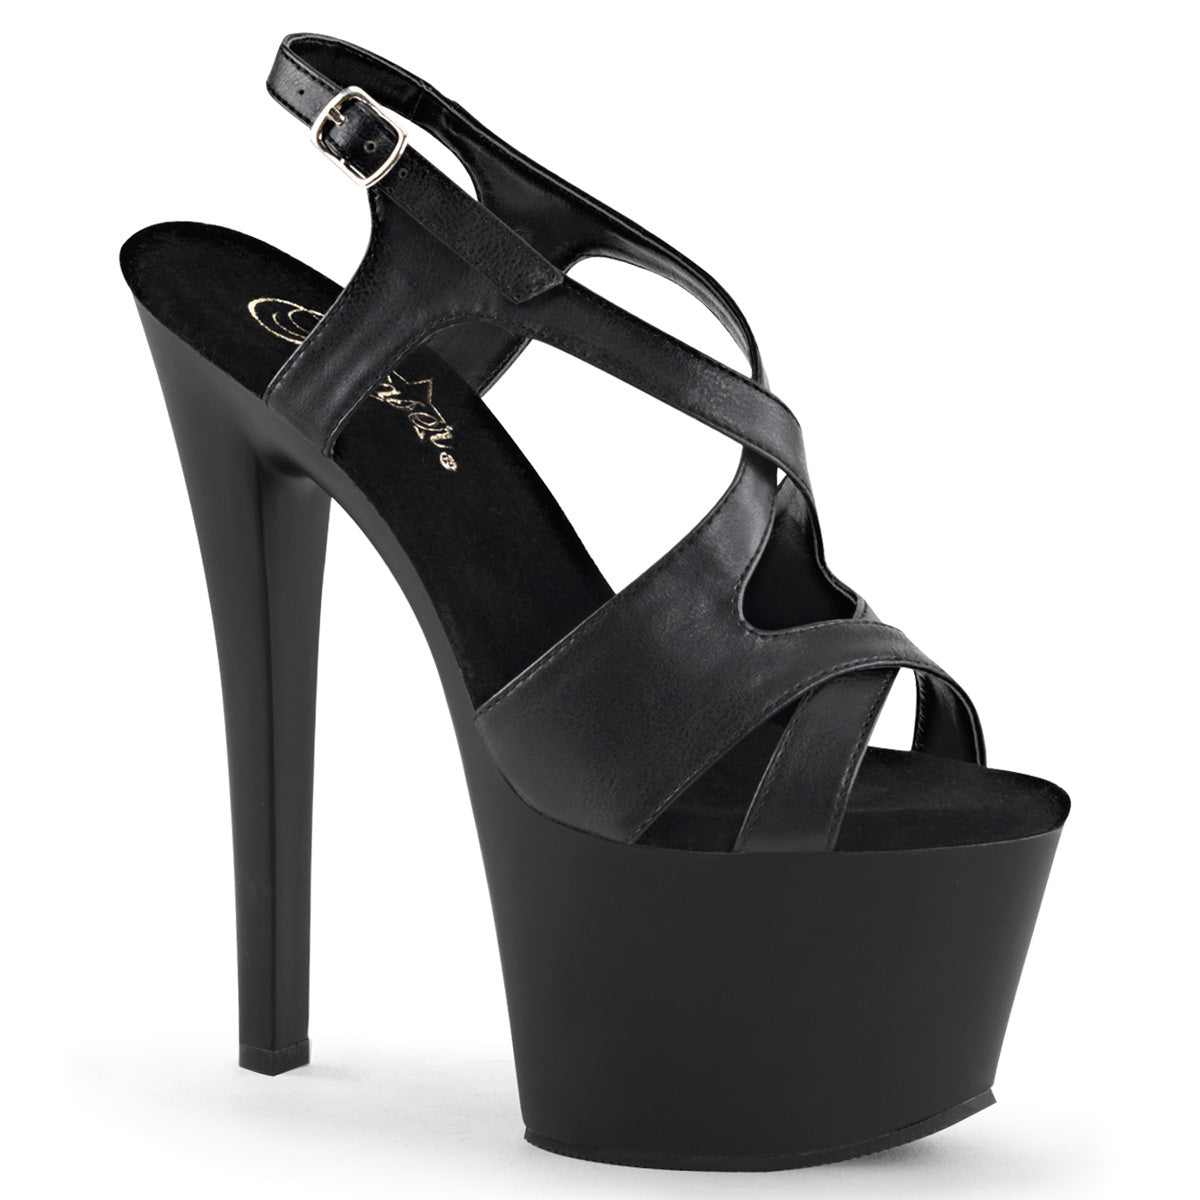 Black Tulipano high heel platform shoes with chains | Women's shoes |  Official archives of Merkandi | Merkandi B2B